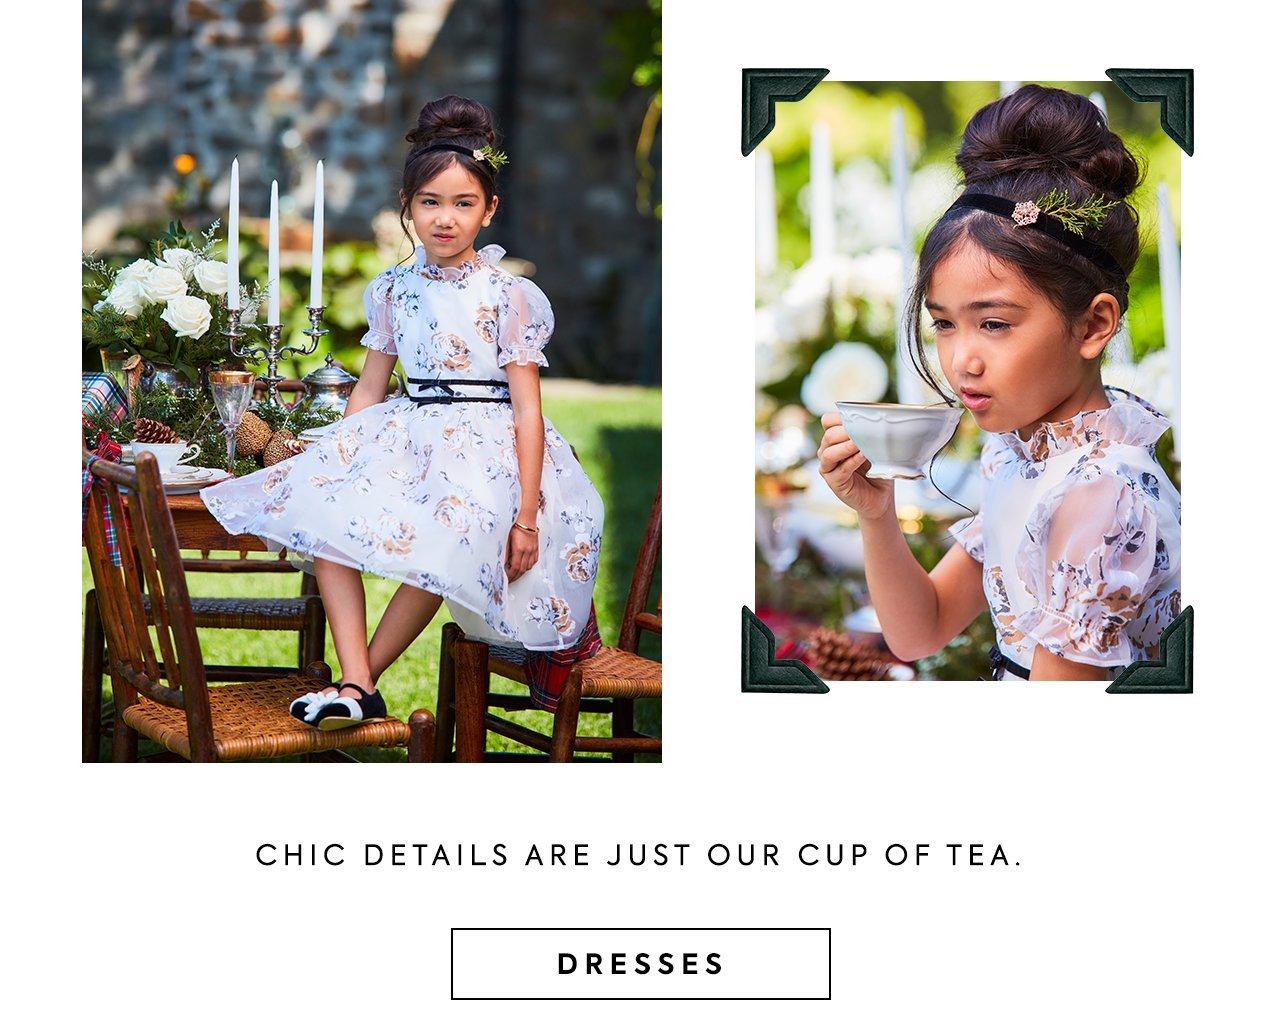 Buy Girls Princess Dress Online In India -  India